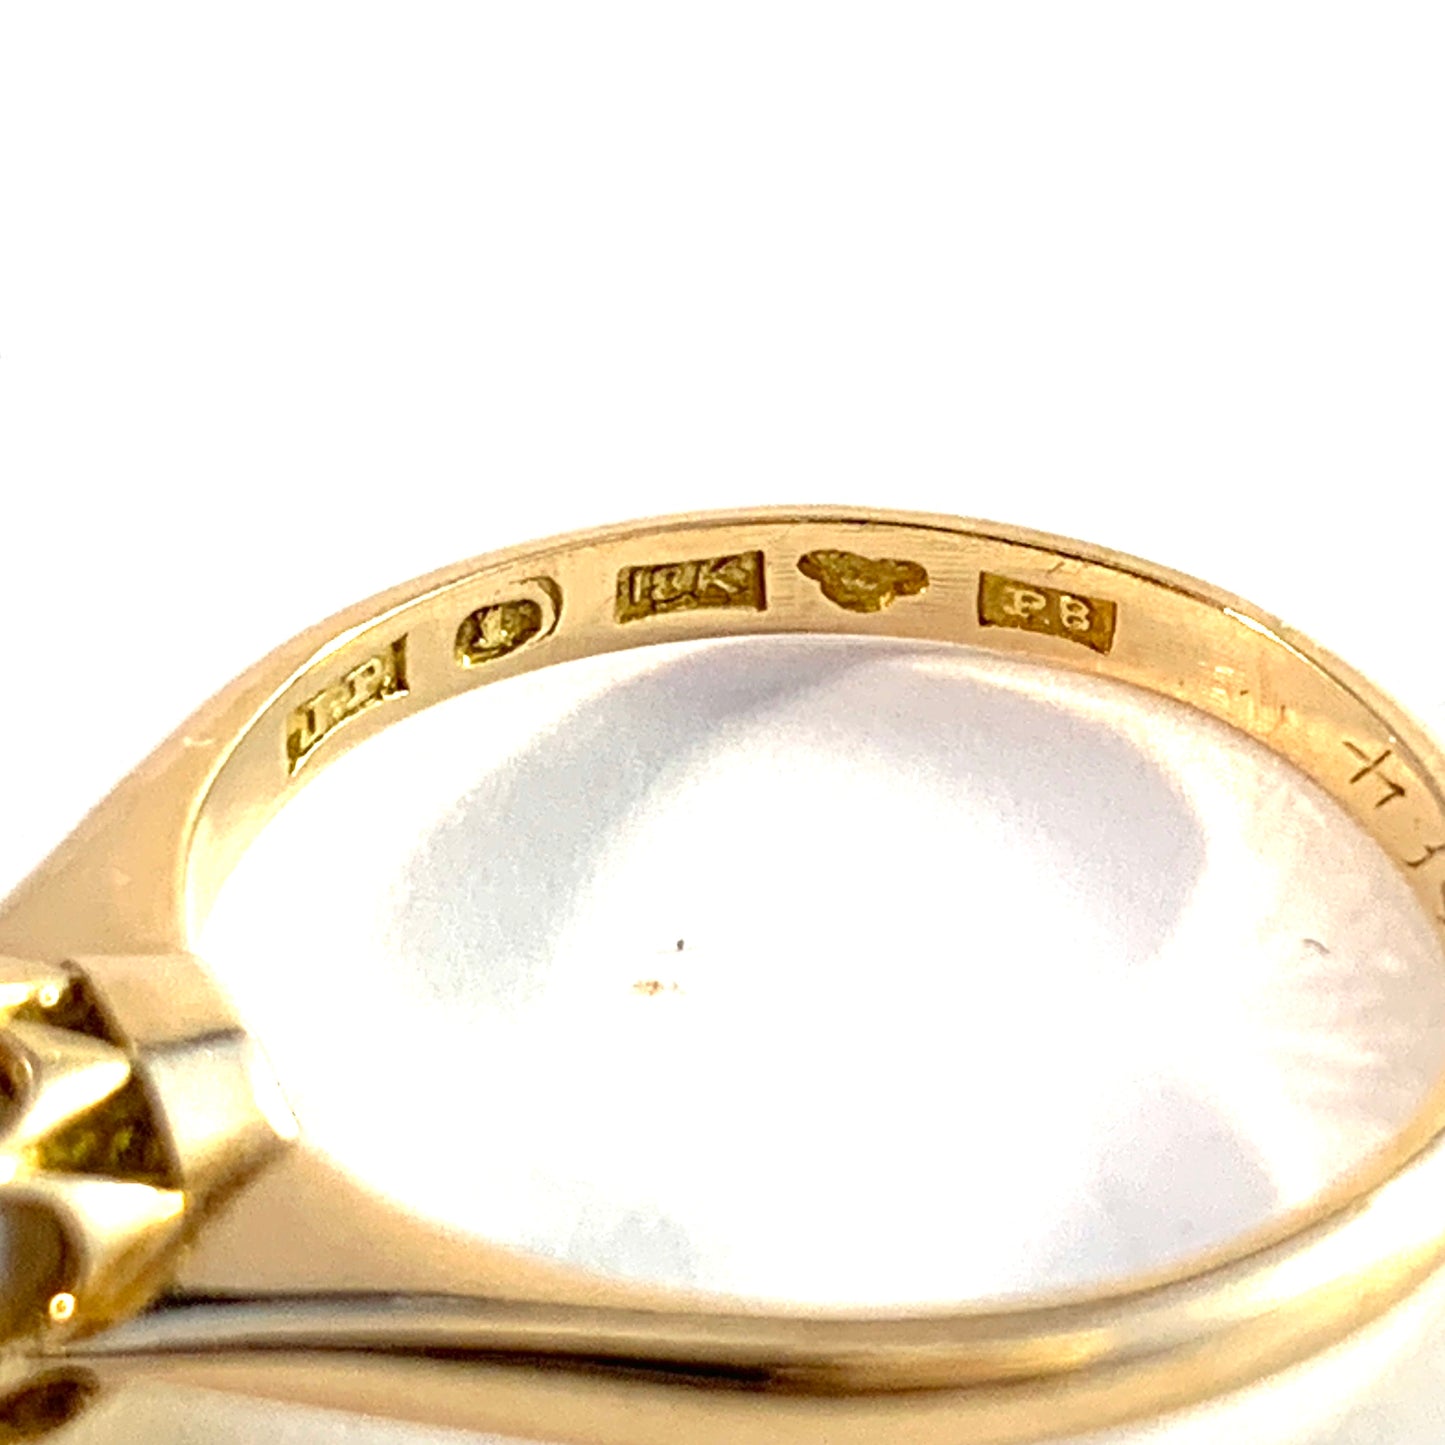 J Petterson, Sweden year 1941. Vintage War-Time 18k Gold Cultured Pearl Ring.